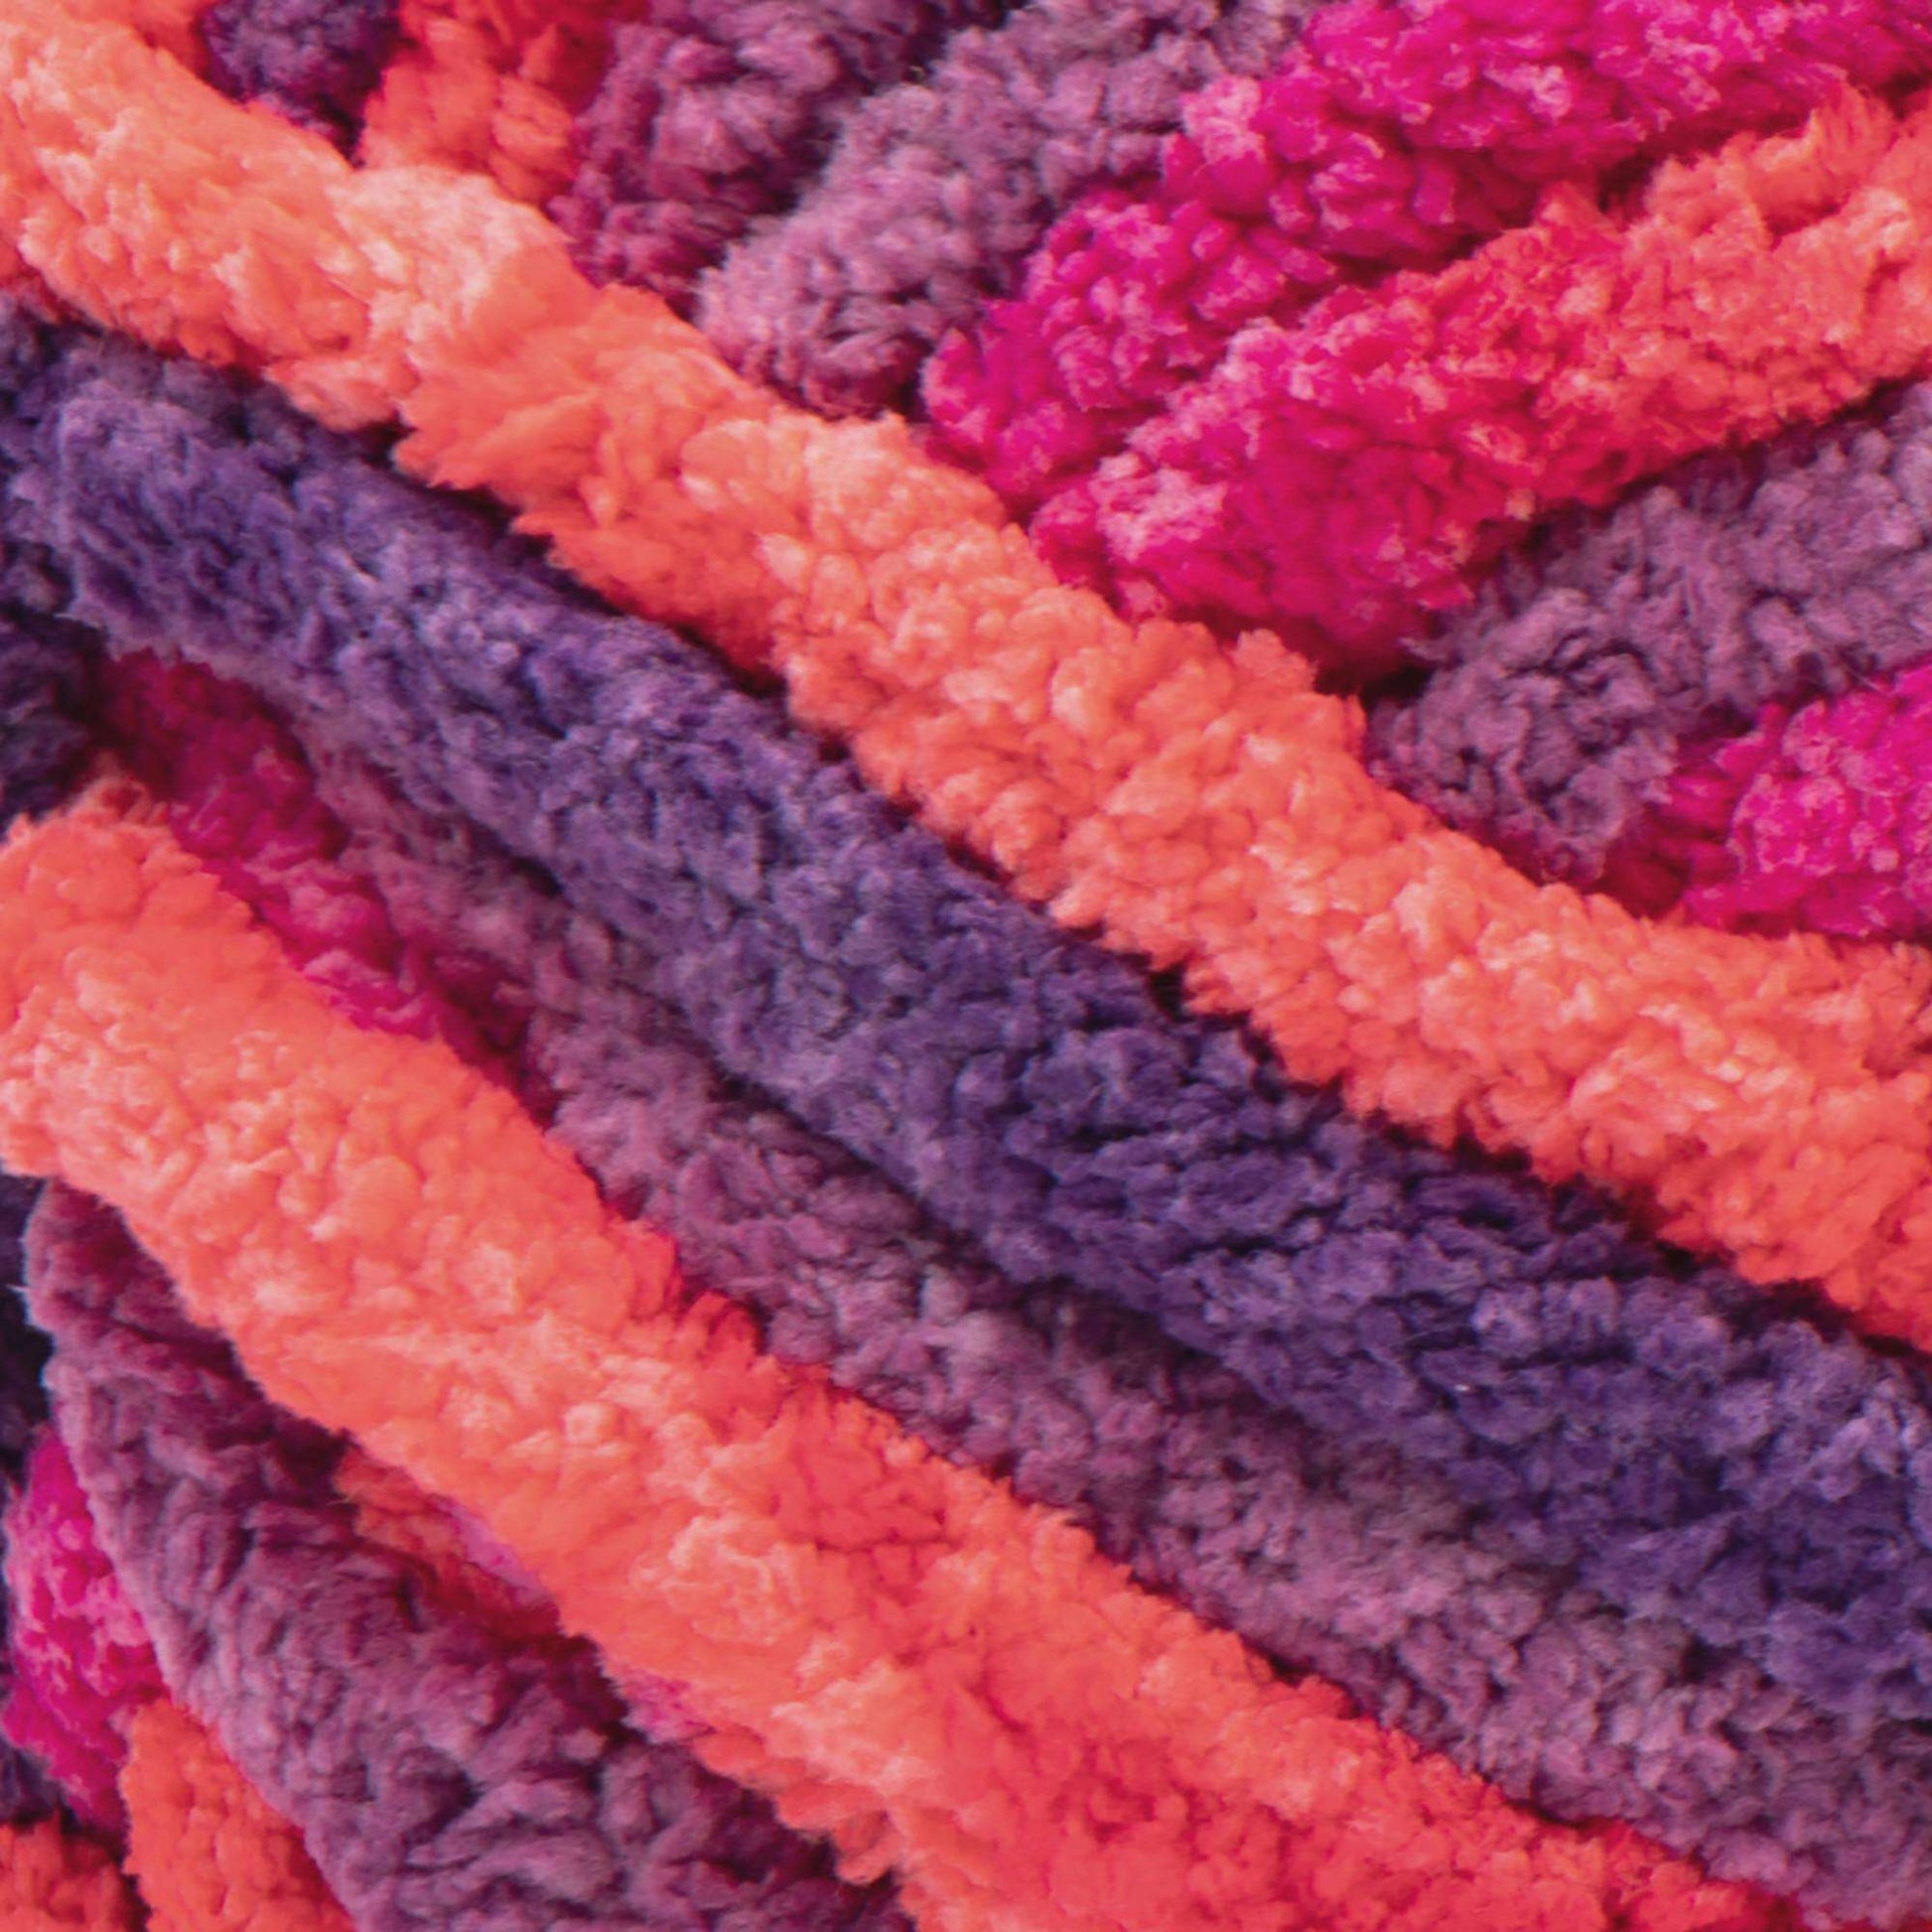 Bernat Blanket Extra Yarn (300g/10.5oz) Plummy Brights Varg